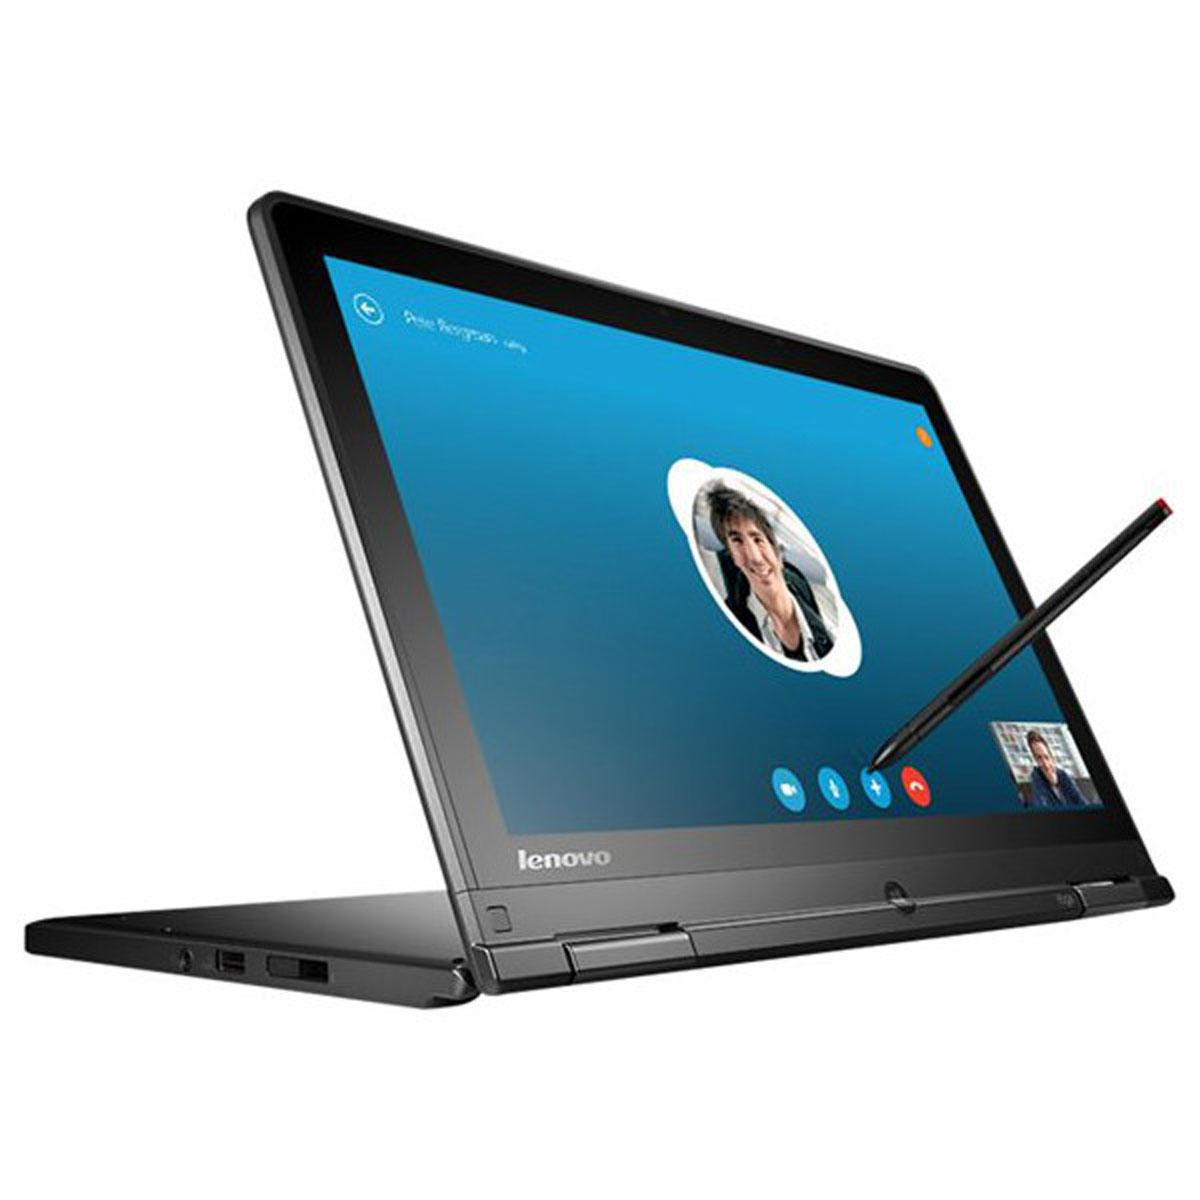 Lenovo ThinkPad Yoga 12 Touch Core i5-5300U 8GB RAM 500GB HDD W10P B-Ware